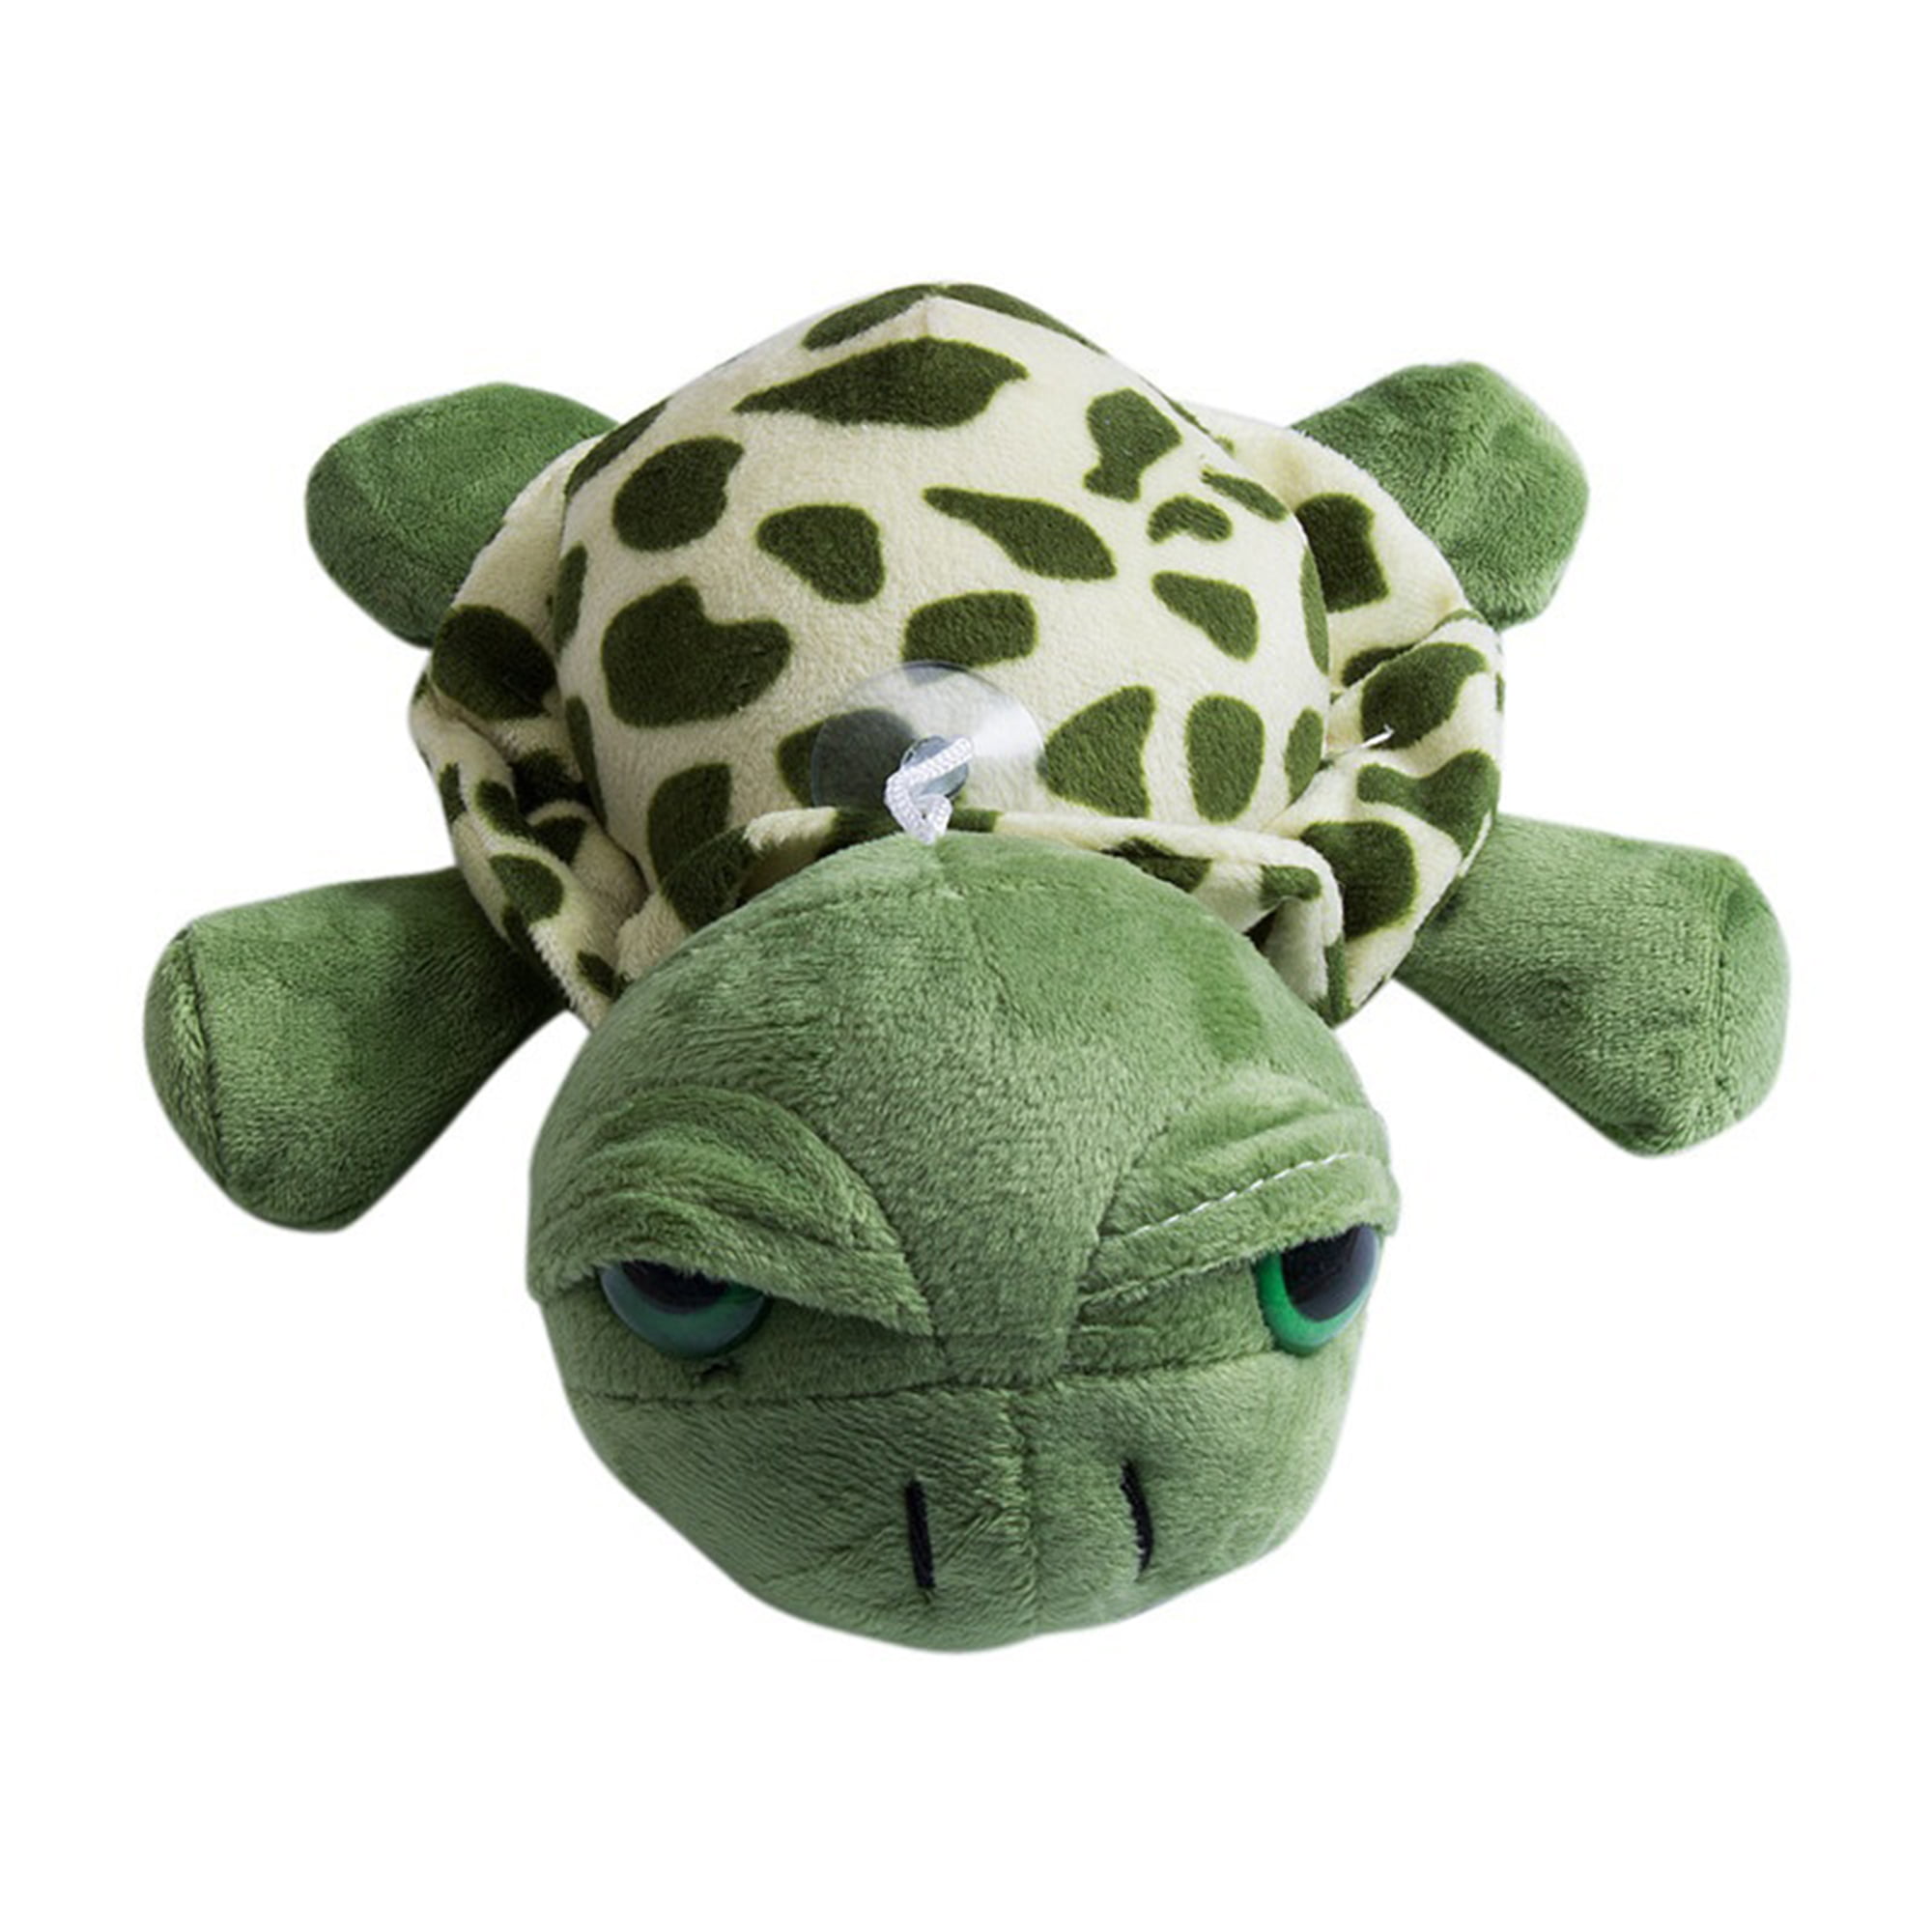 39'' Giant Huge big Plush Tortoise Turtle Stuffed Animal Soft Toys doll gift new 